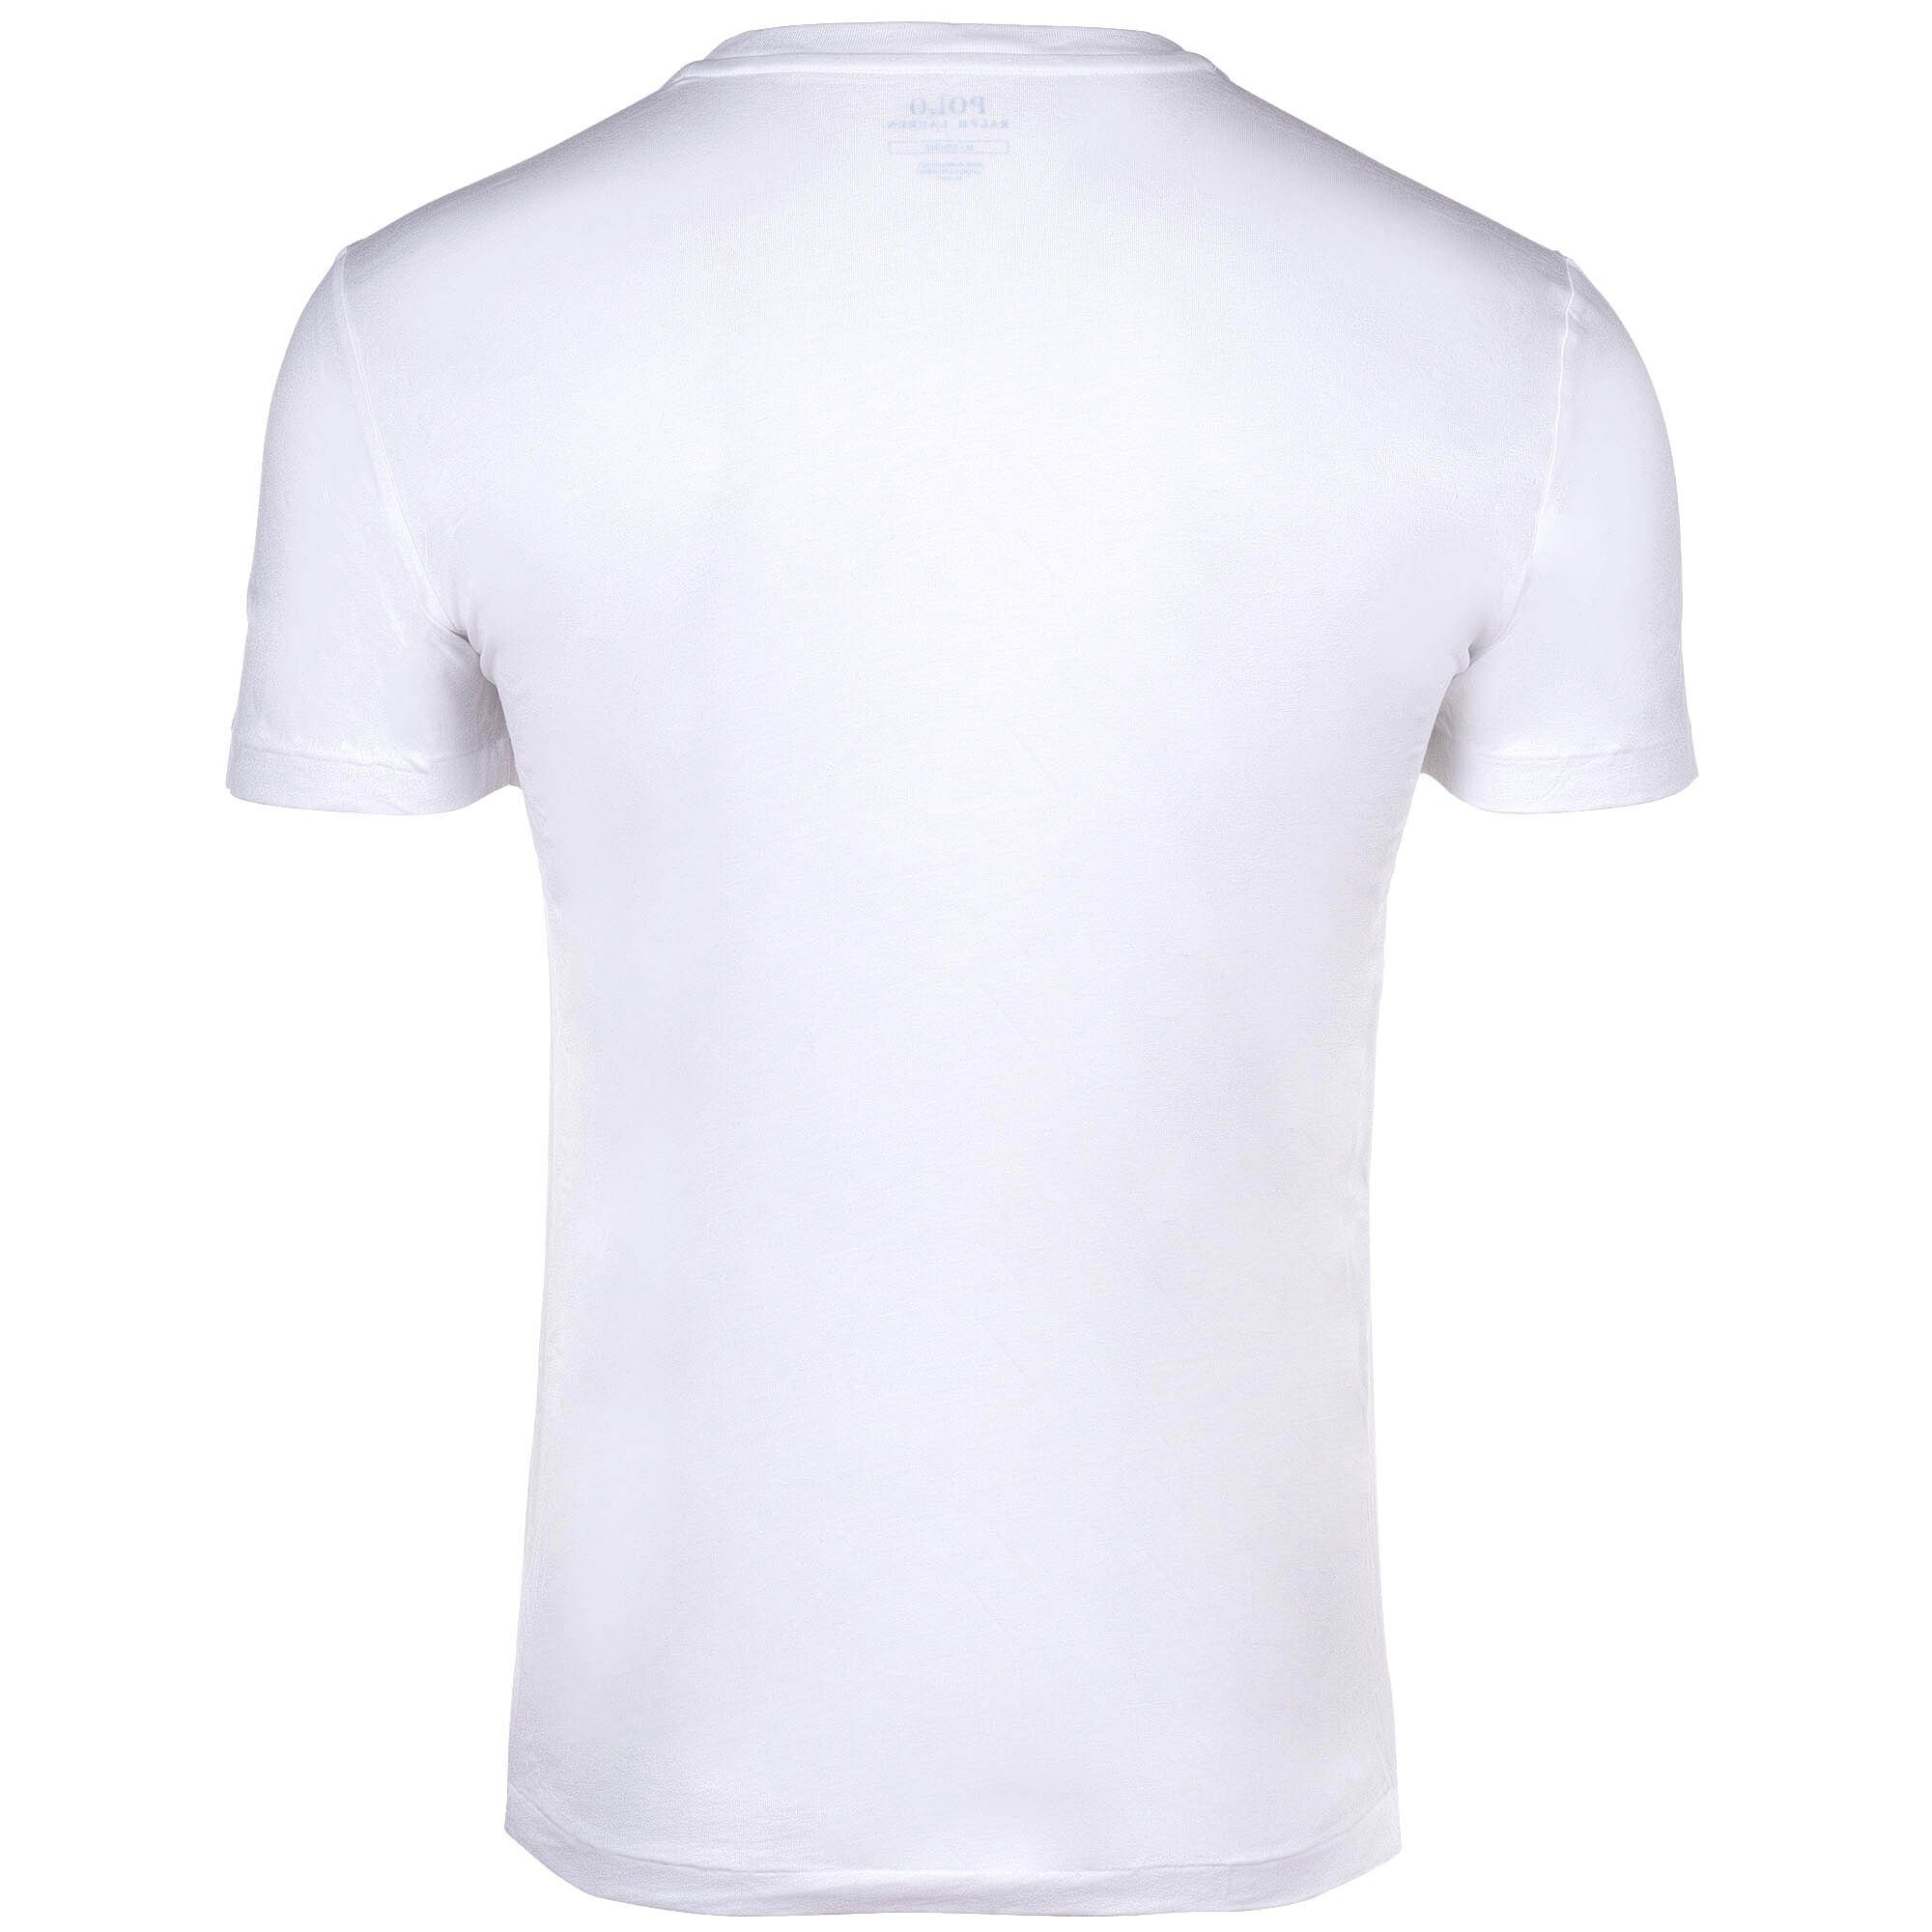 Polo Weiß/Grau/Schwarz Ralph 3-PACK-CREW T-Shirt T-Shirts, 3er Herren Pack CREW Lauren -